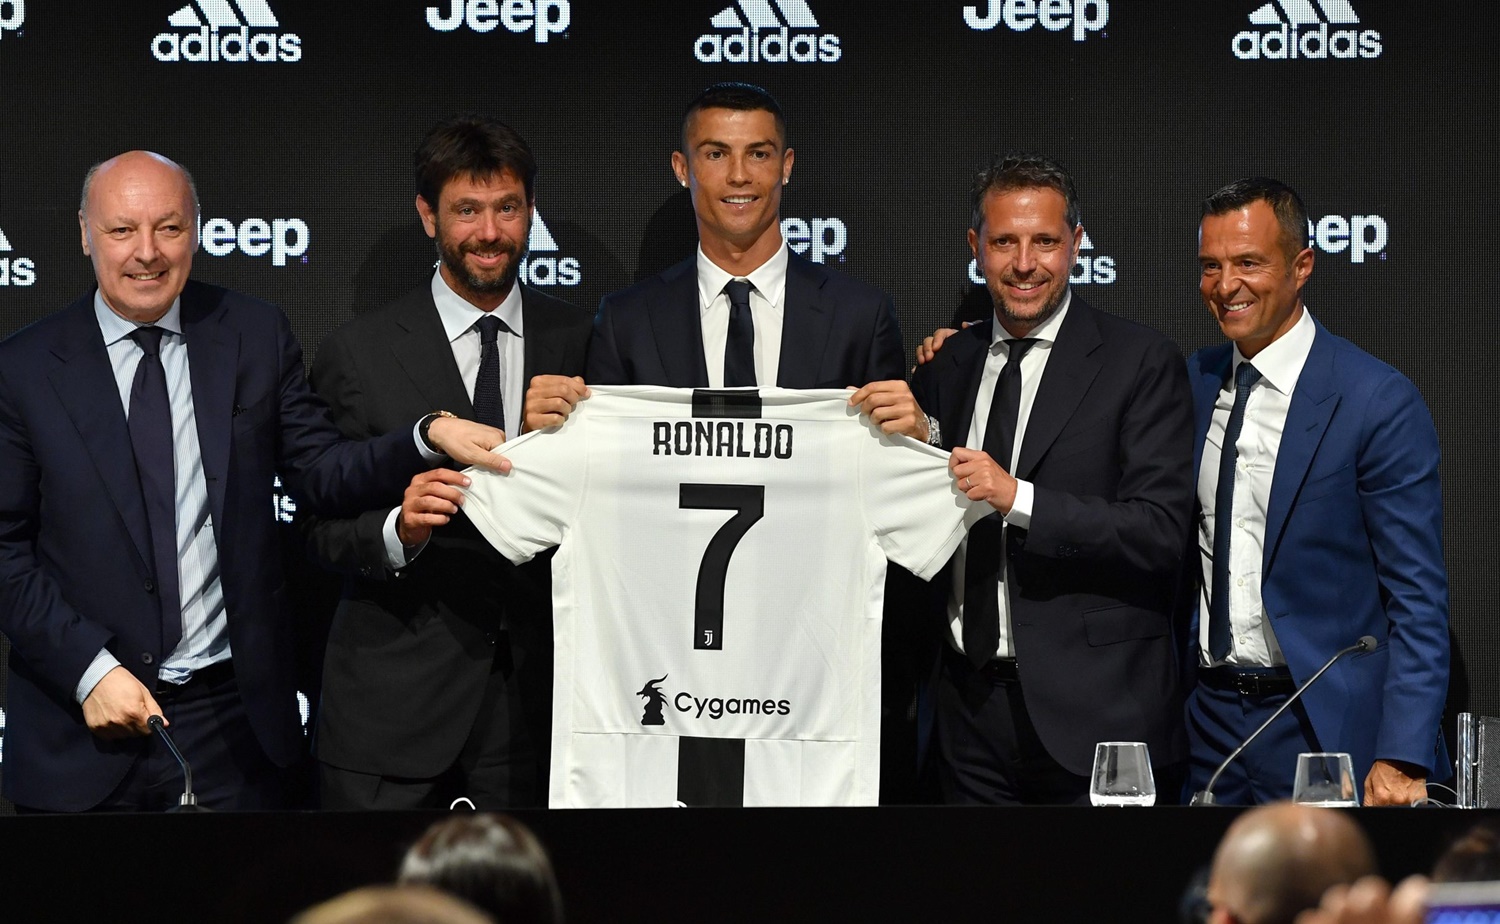 12 million euros from Juventus to Ronaldo's agent Jorge Mendes